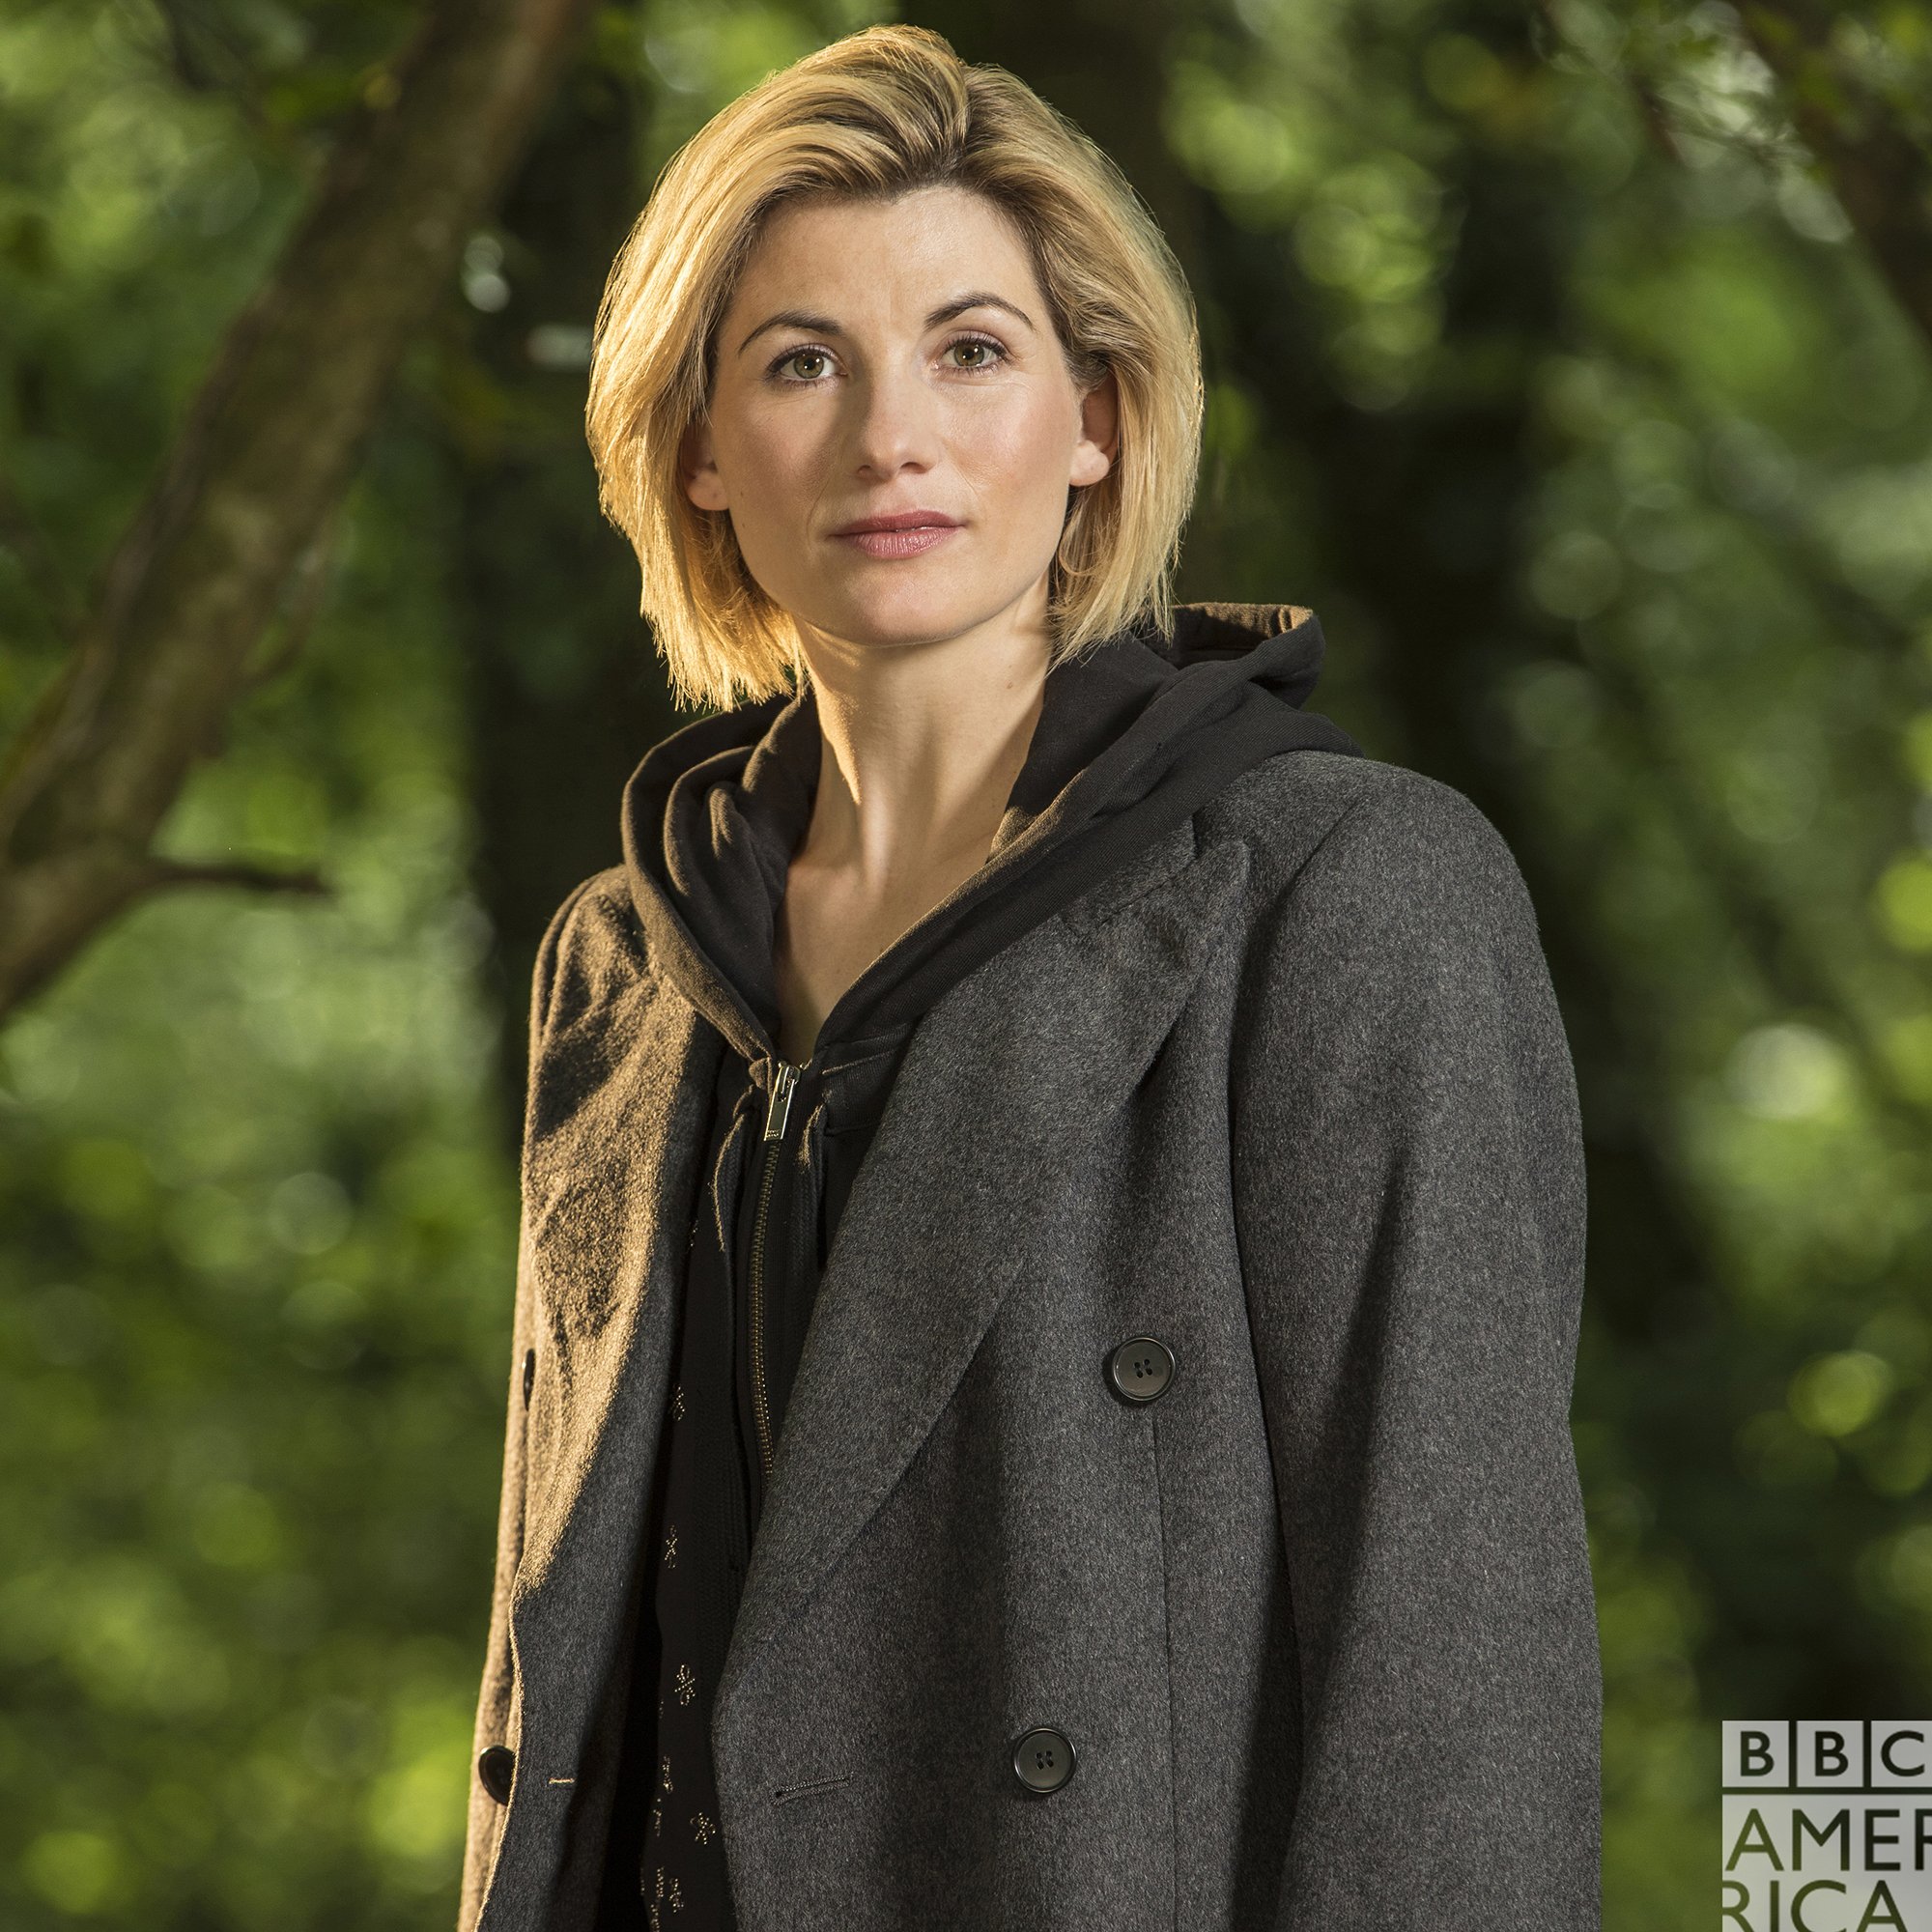 Jodie Whittaker is The Thirteenth Doctor